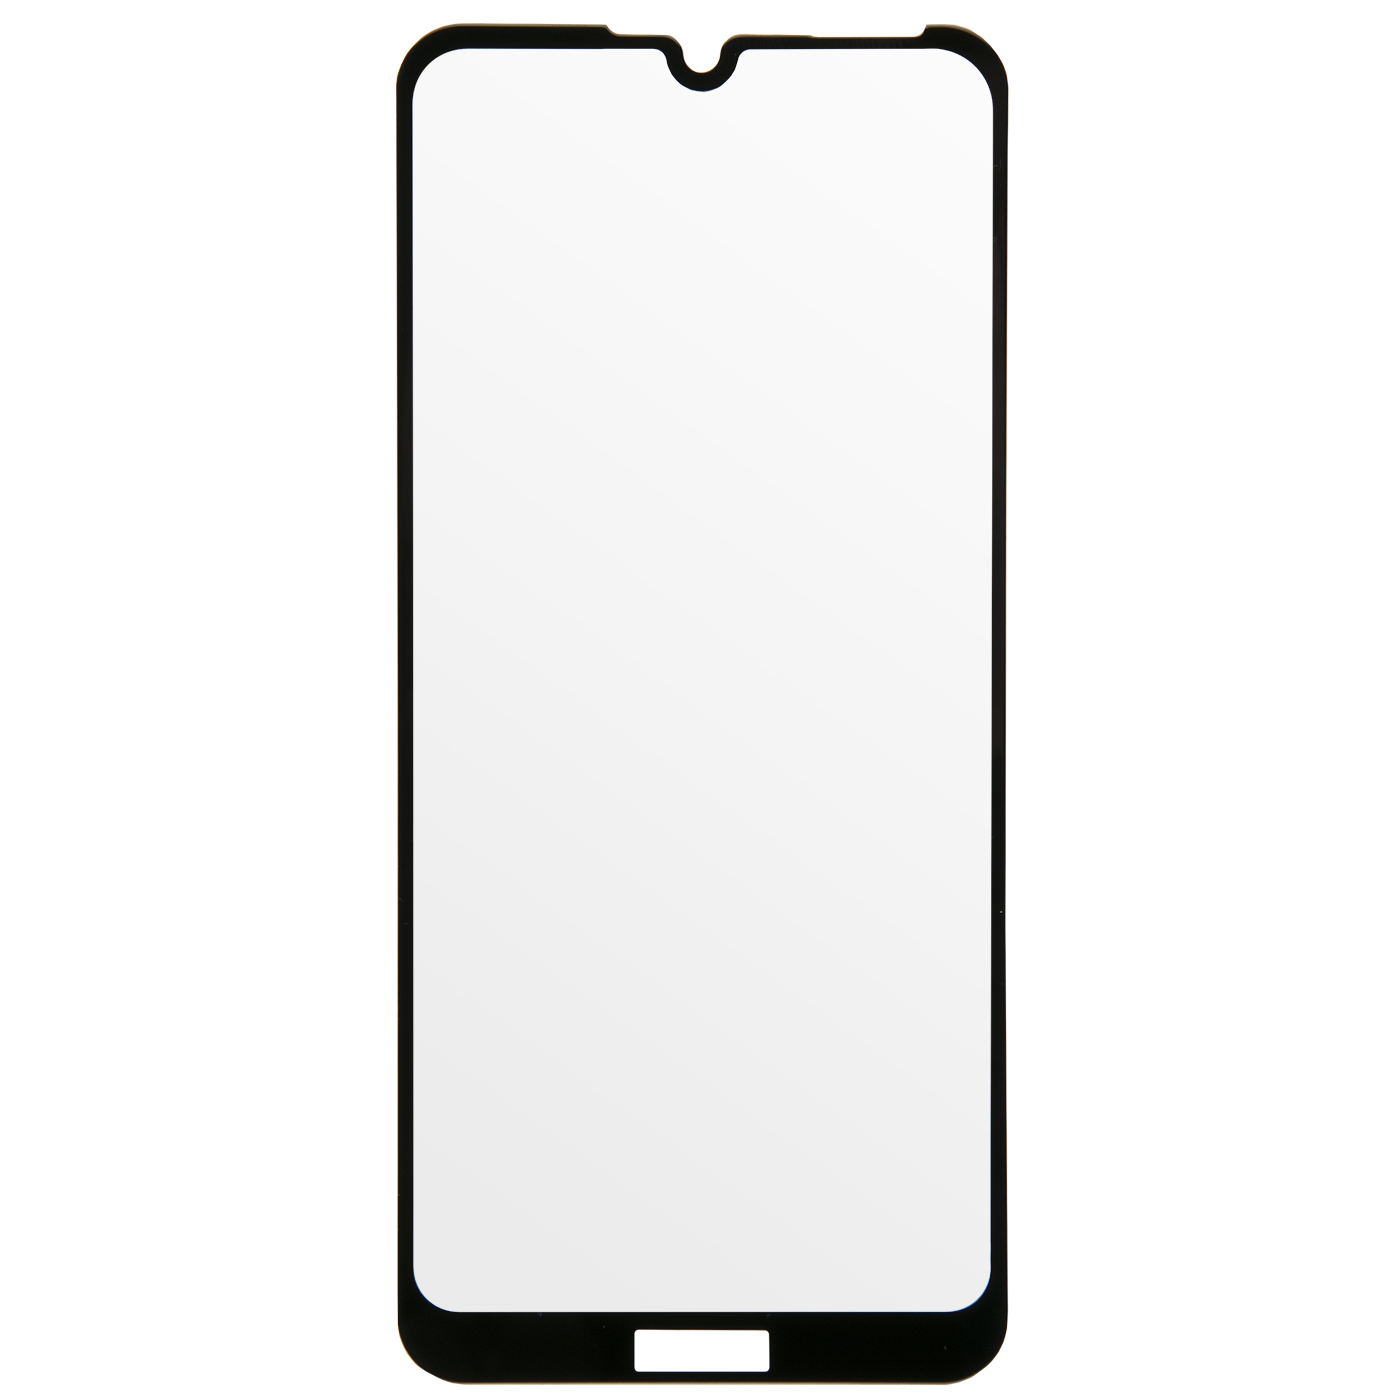 Защитный экран Huawei Honor 8A/8A Pro/Y6s 2019 Full Screen (3D) tempered glass FULL GLUE